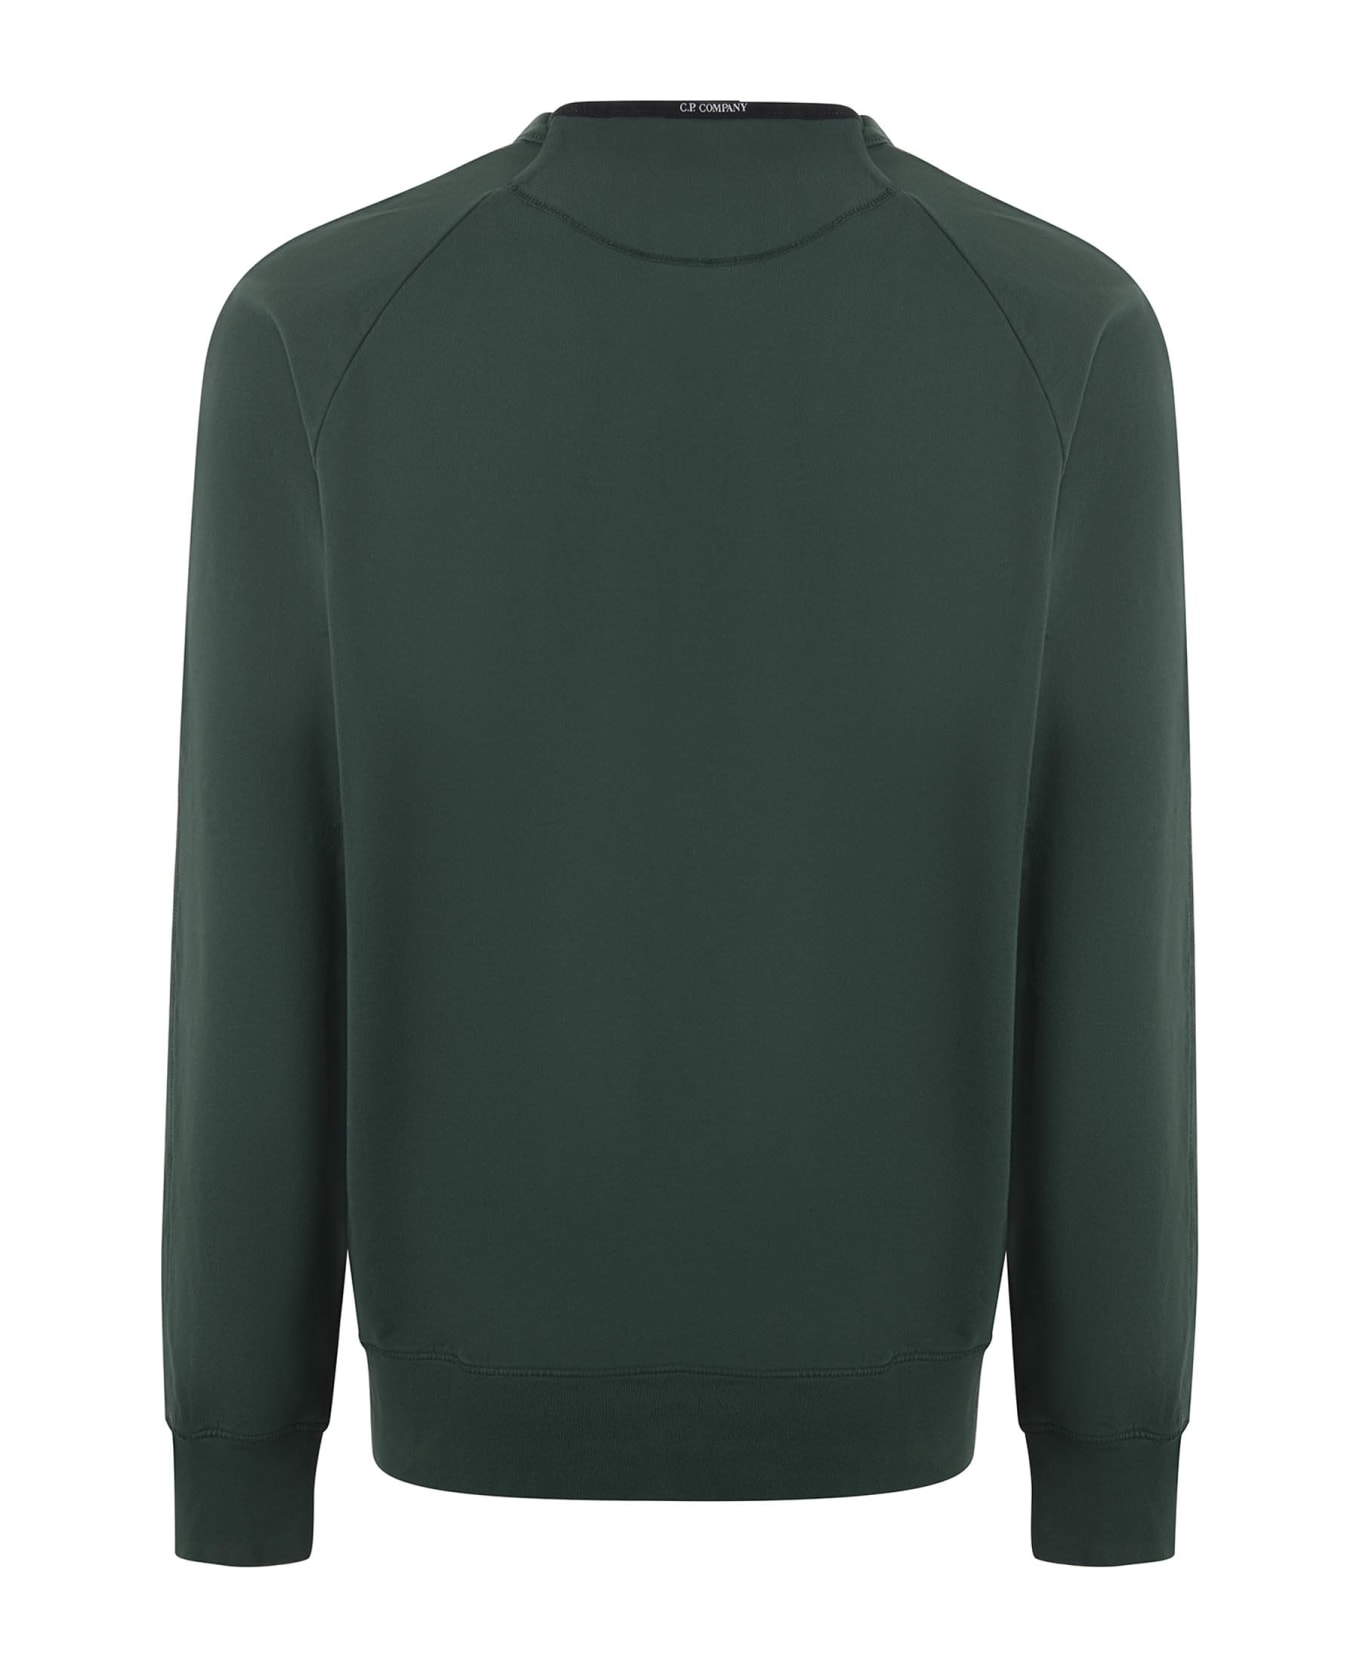 C.P. Company Lightweight Sweatshirt - Verde militare